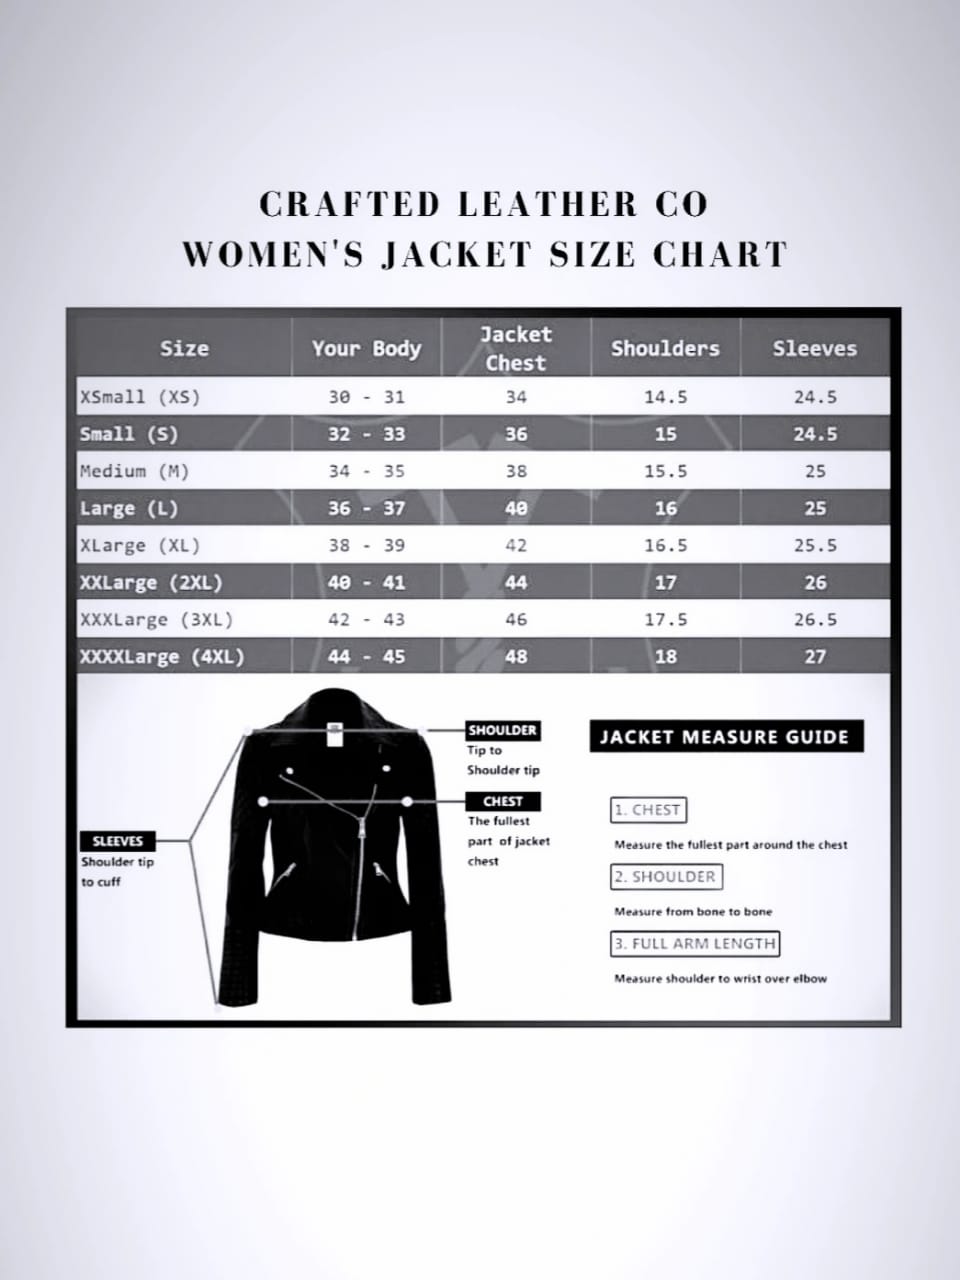 Burgundy Bikers Leather Jacket for Women's Motorcycle Jacket